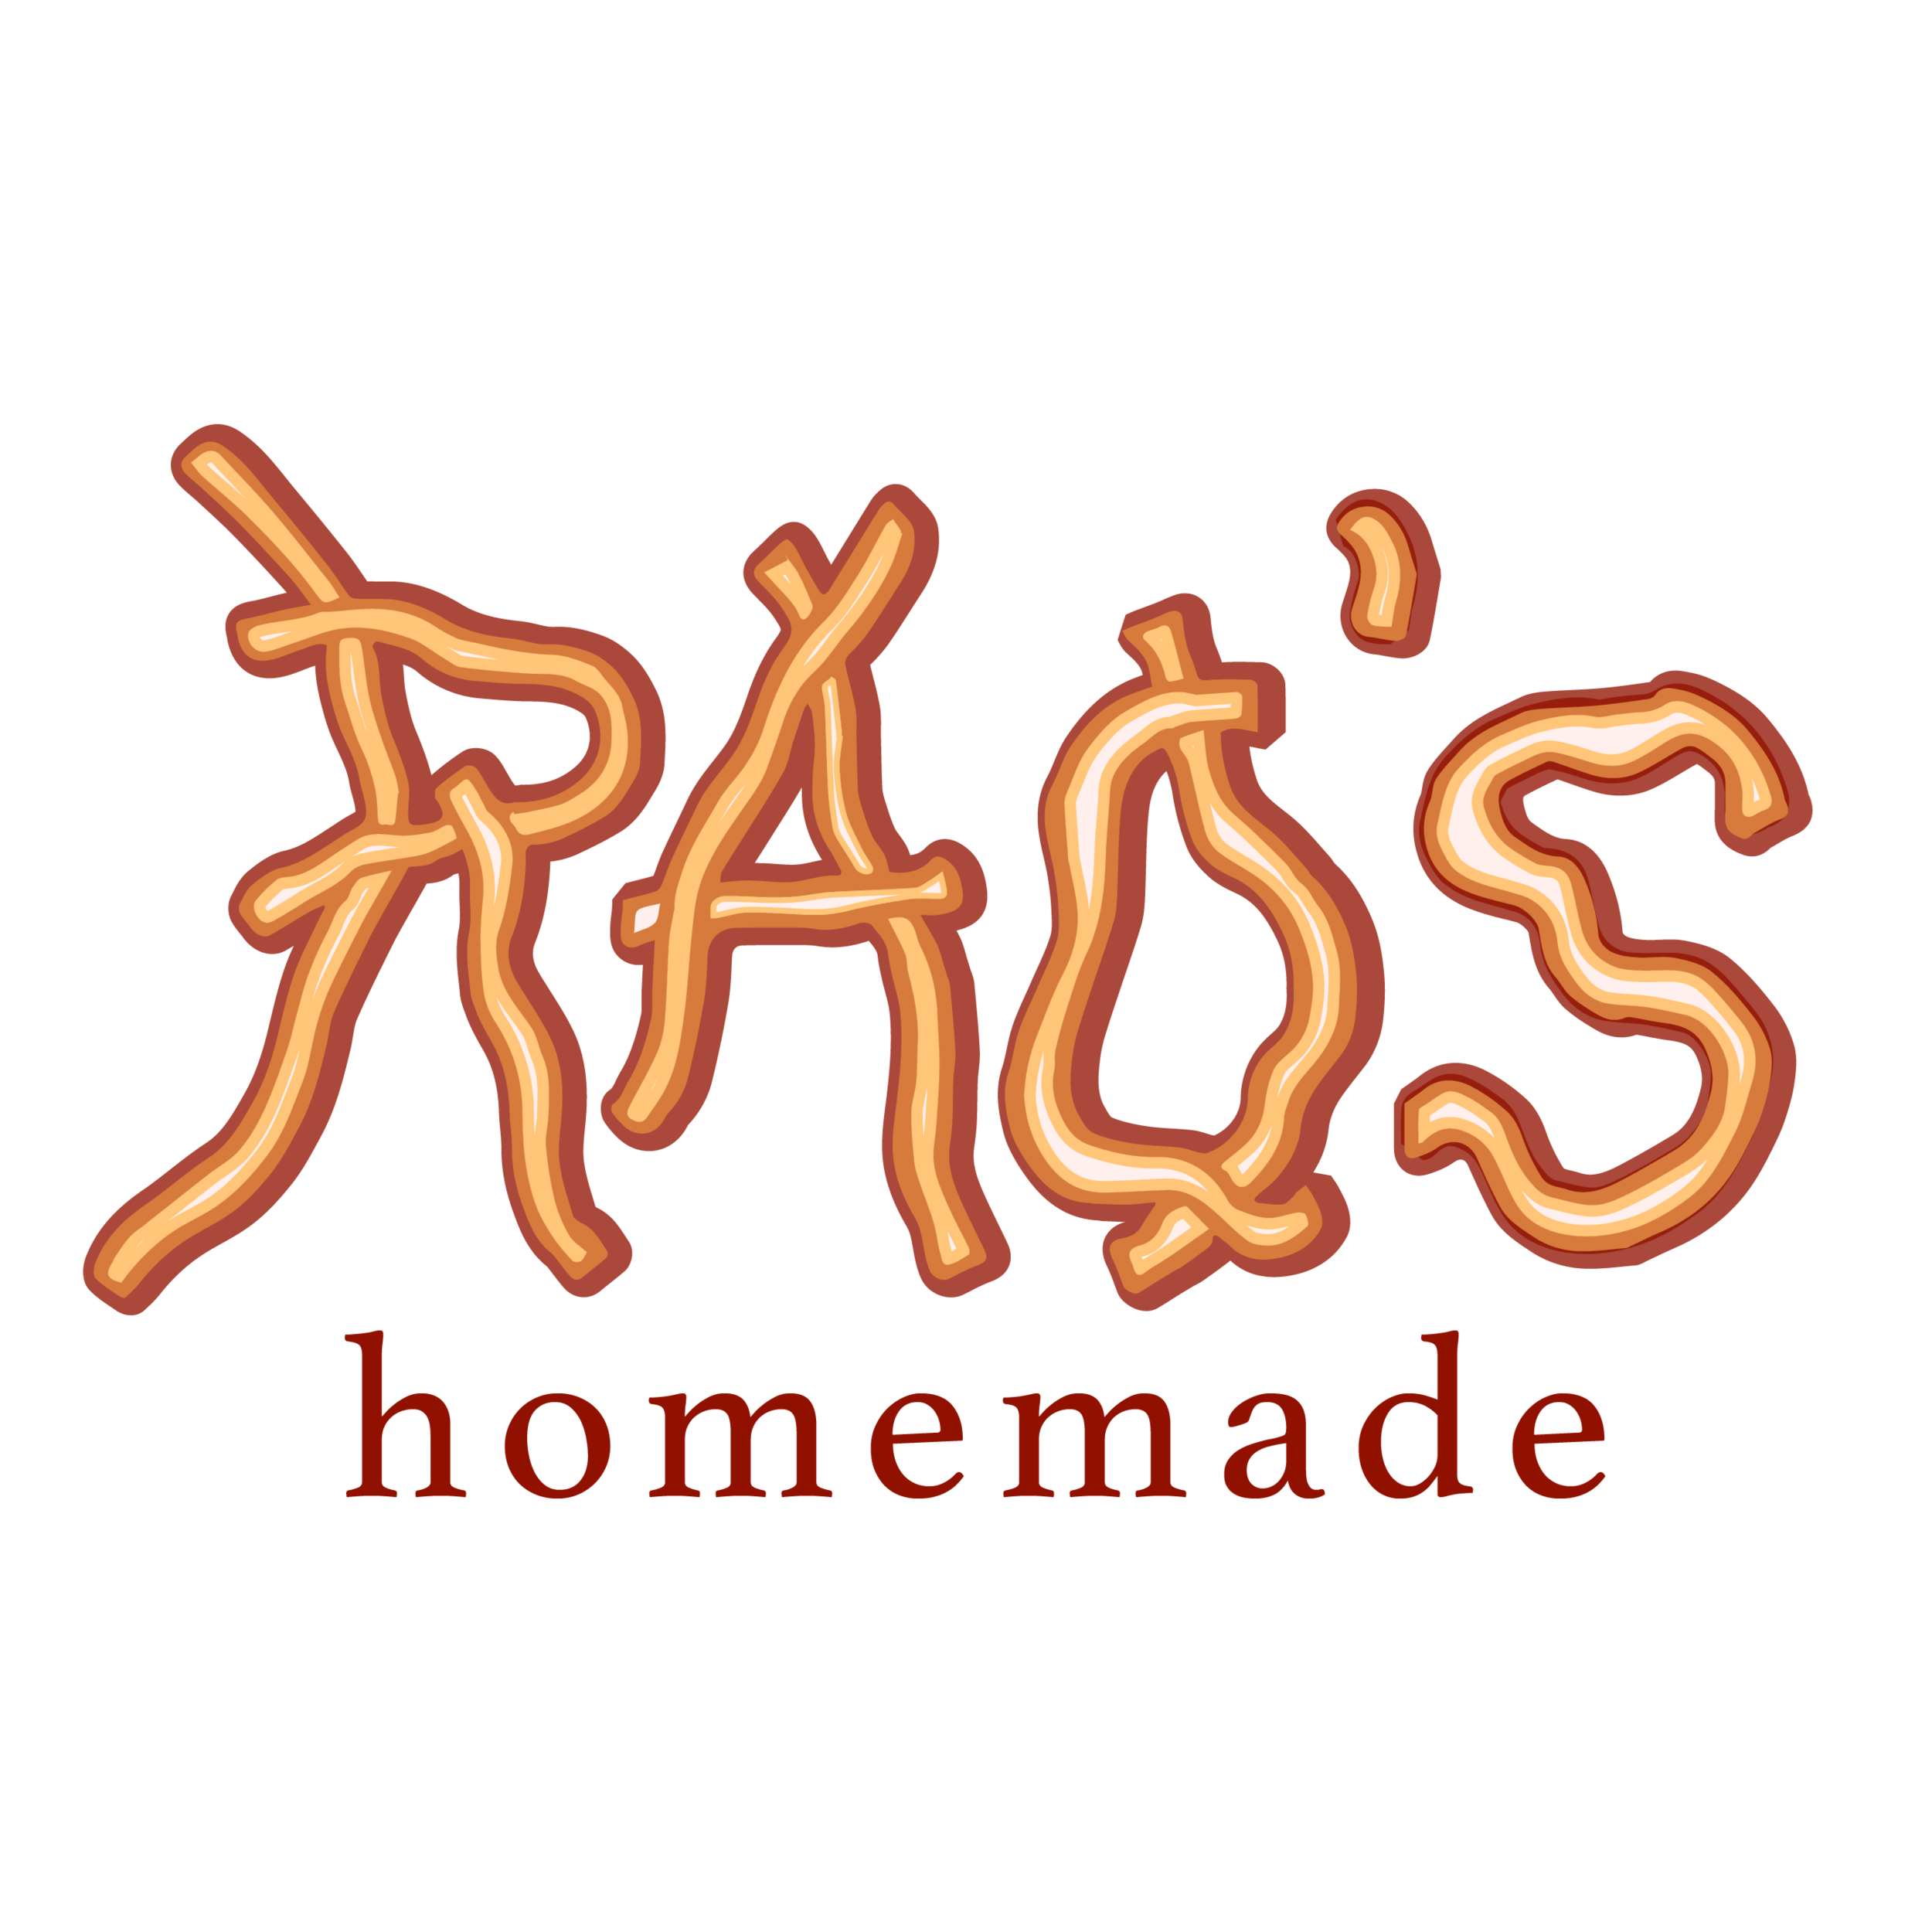 Rao's Homemade - Sauce Brand